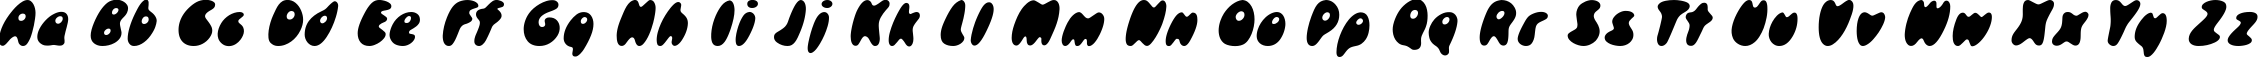 Пример написания английского алфавита шрифтом Skidoos Cyr Italic